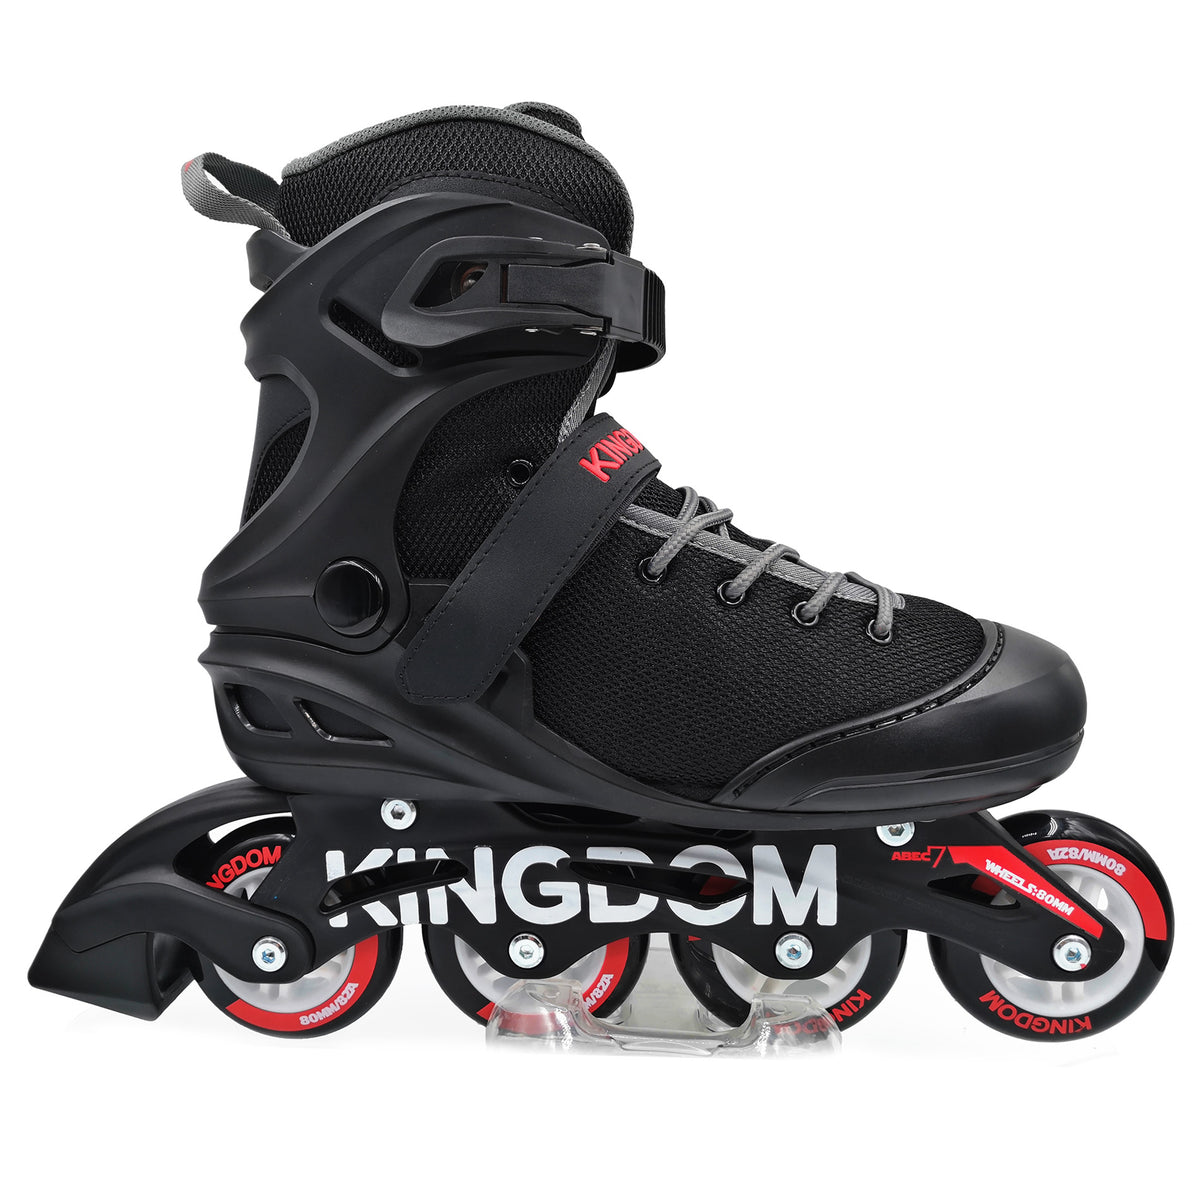 Kingdom GB R40 Rage Inline Roller Skates Black Red